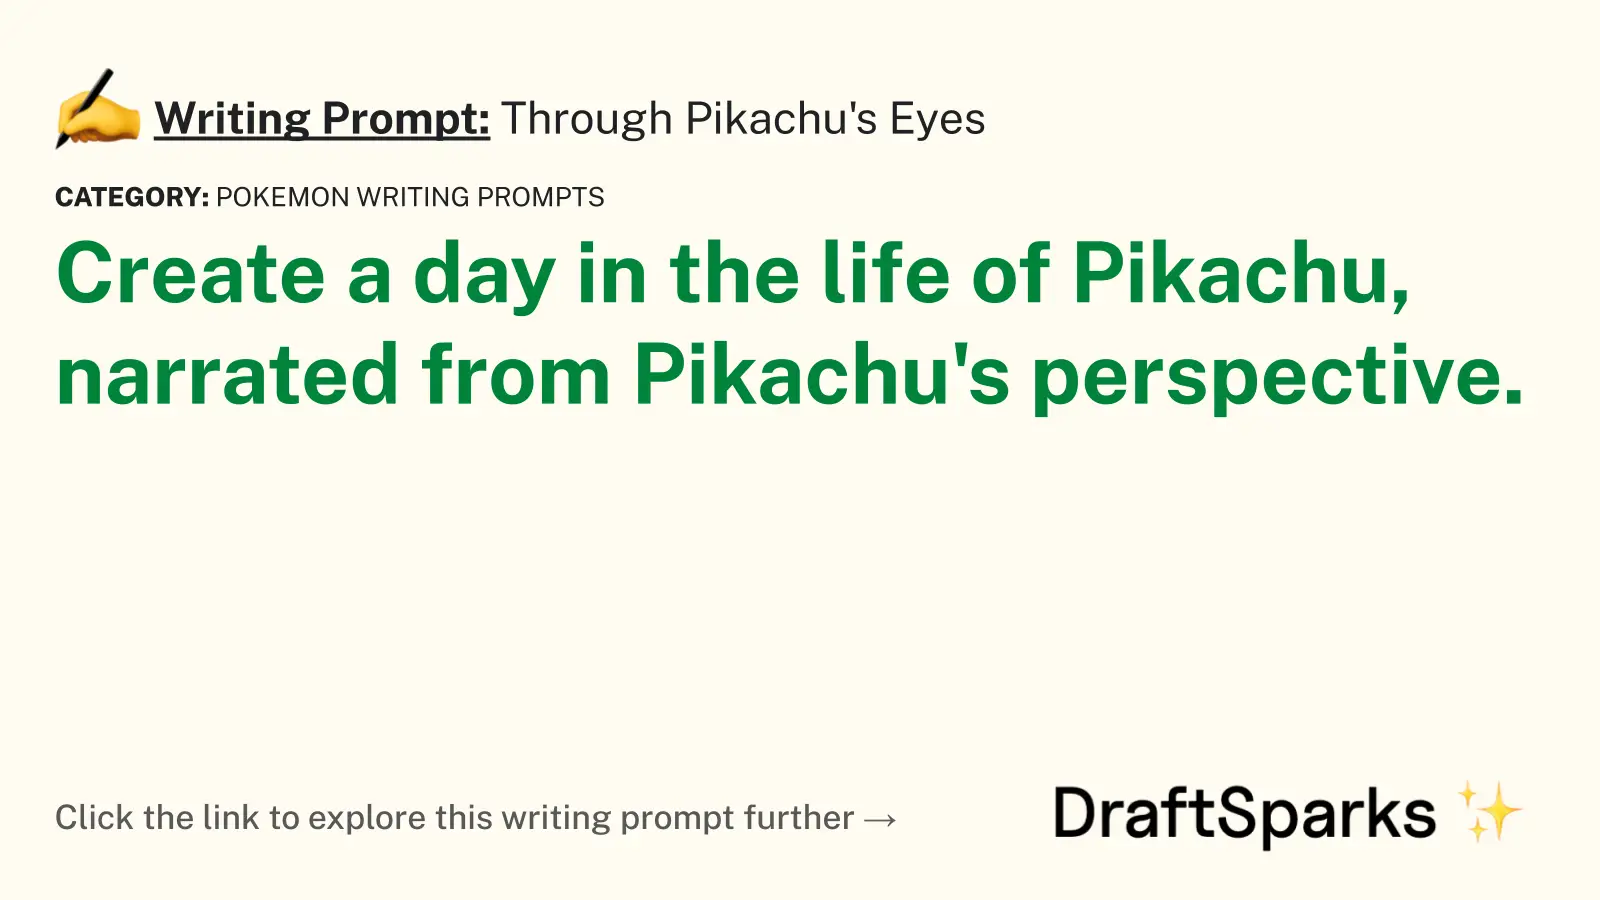 Through Pikachu’s Eyes